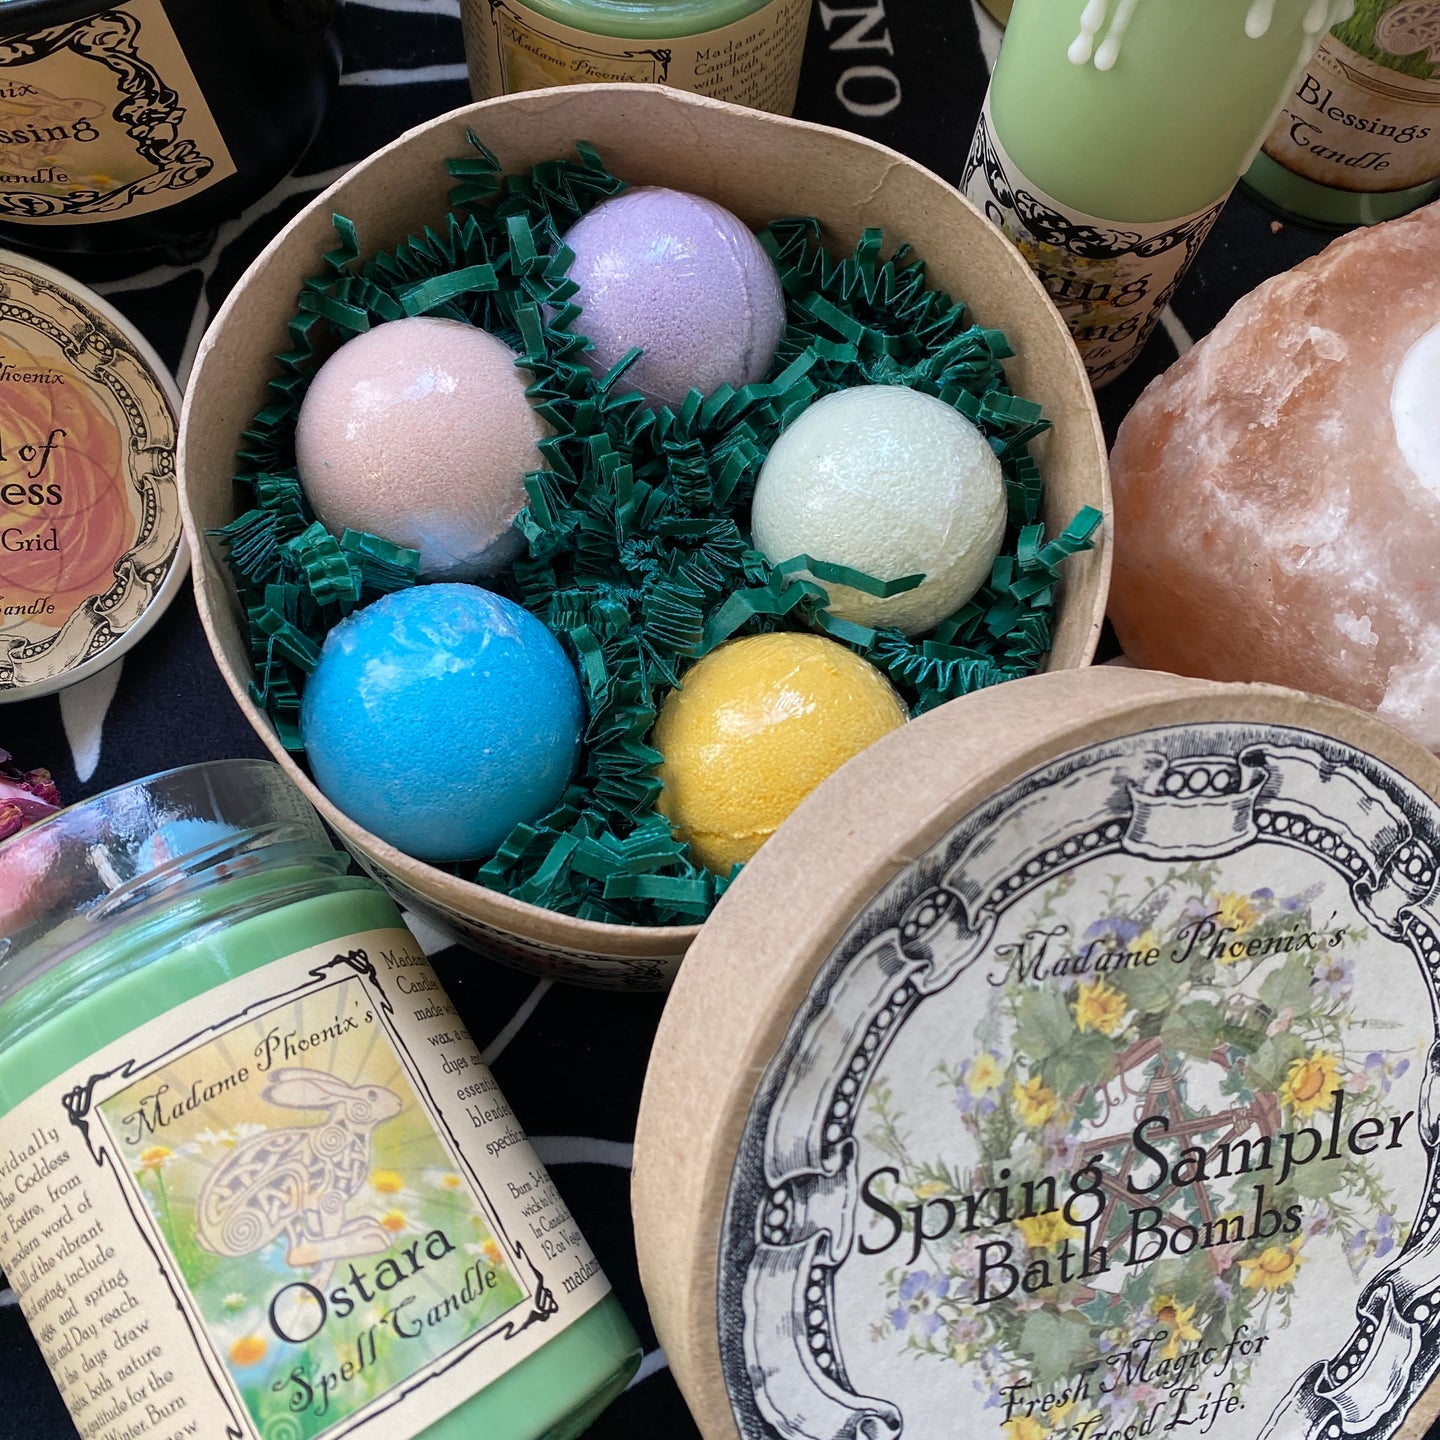 Spring Sampler Magic Bath Bomb Gift Box